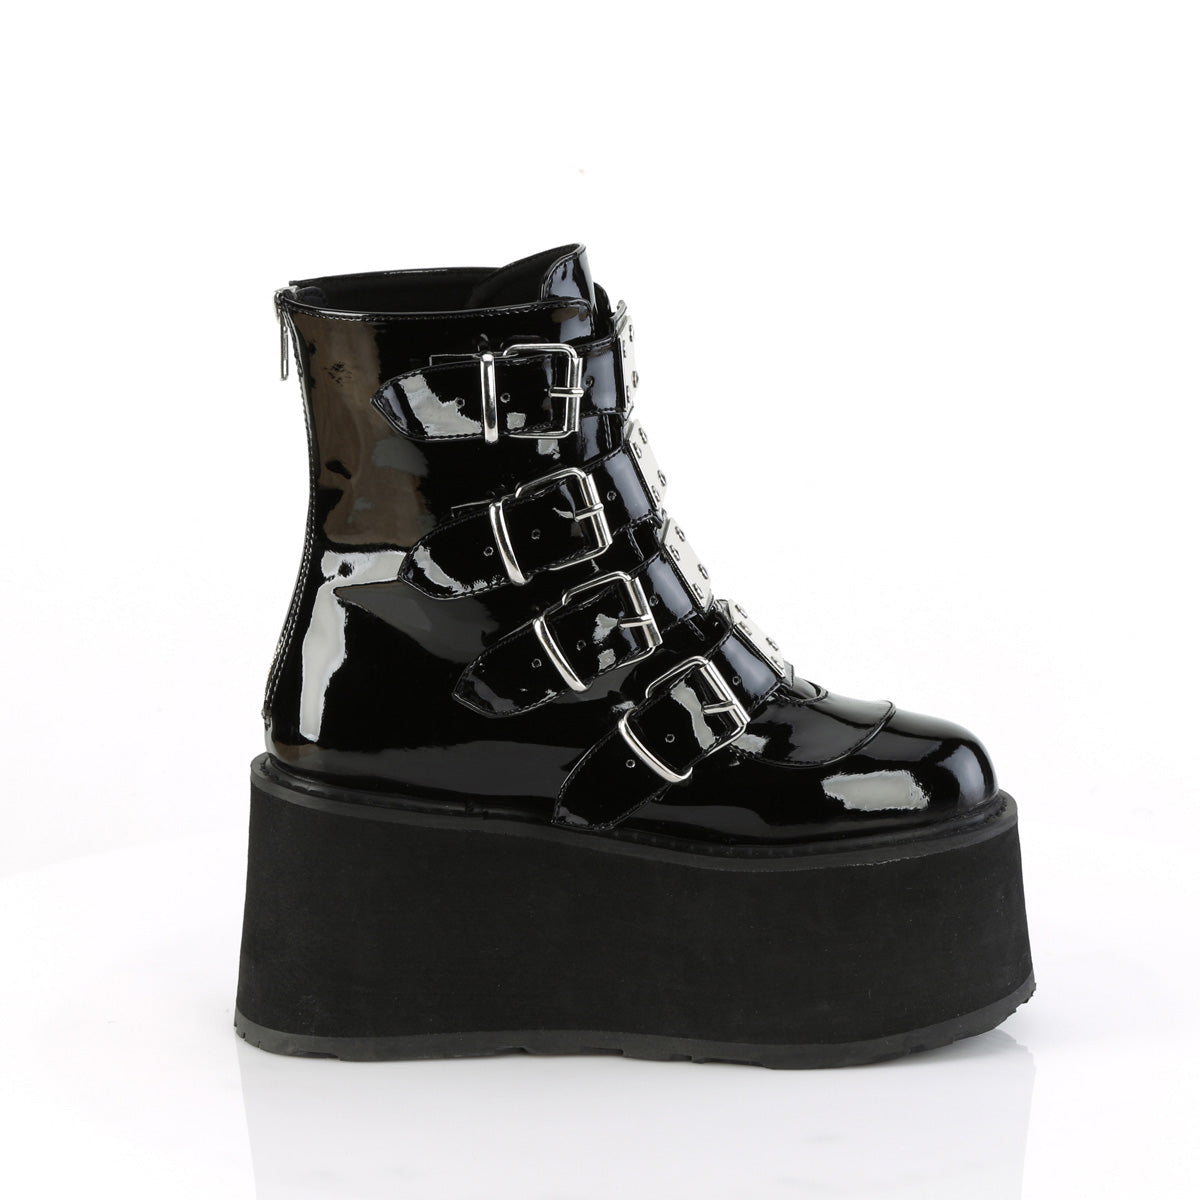 DAMNED-105 Demonia Black Patent Women's Ankle Boots [Demonia Cult Alternative Footwear]